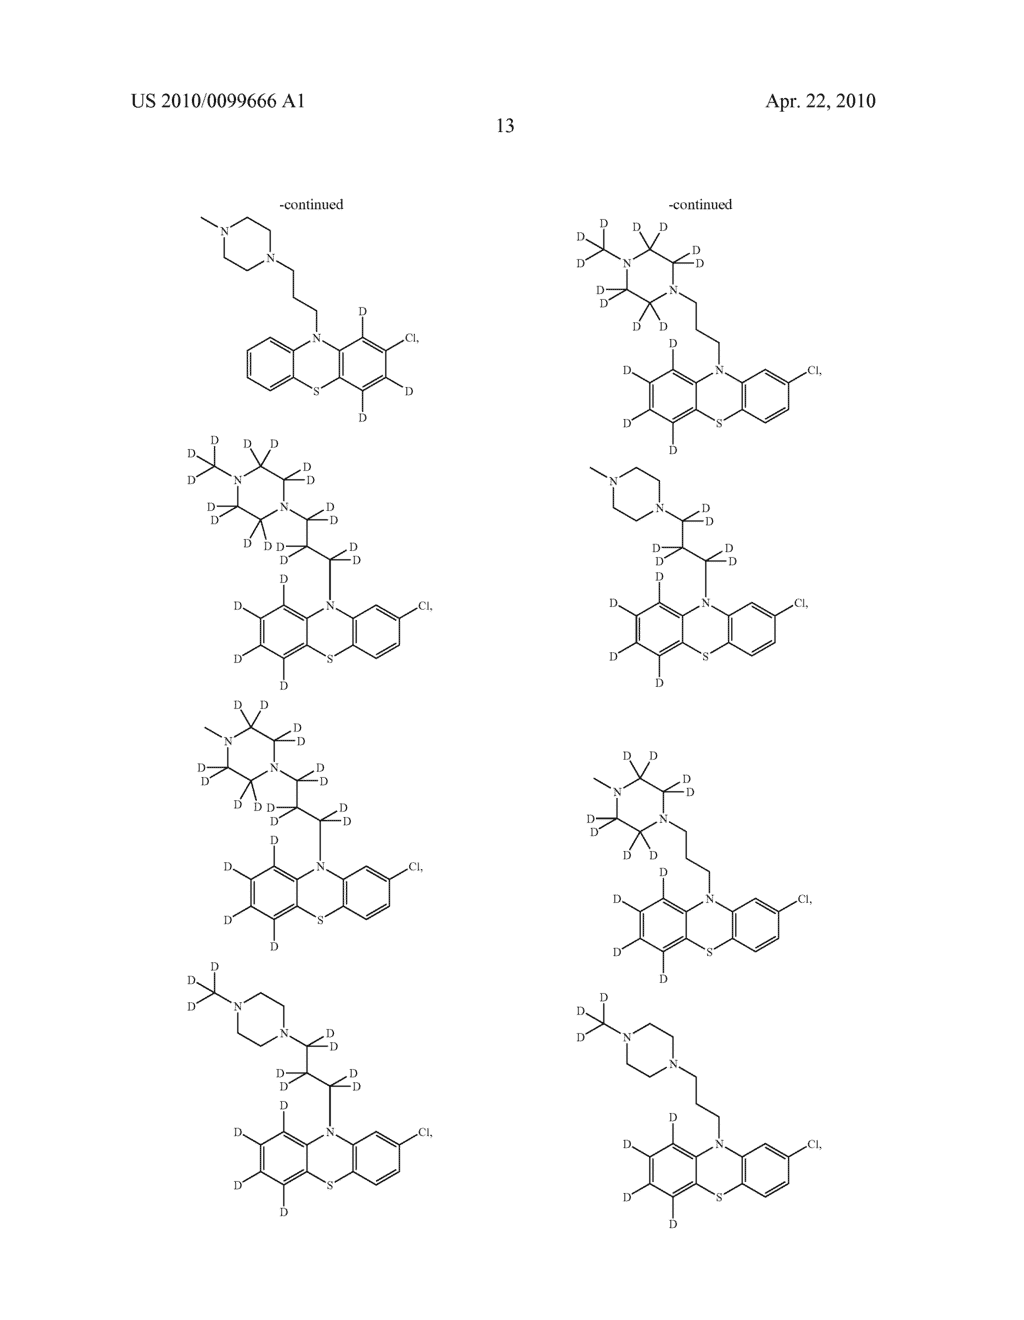 PHENOTHIAZINE MODULATORS OF H1 RECEPTOR AND D2 RECEPTOR - diagram, schematic, and image 14